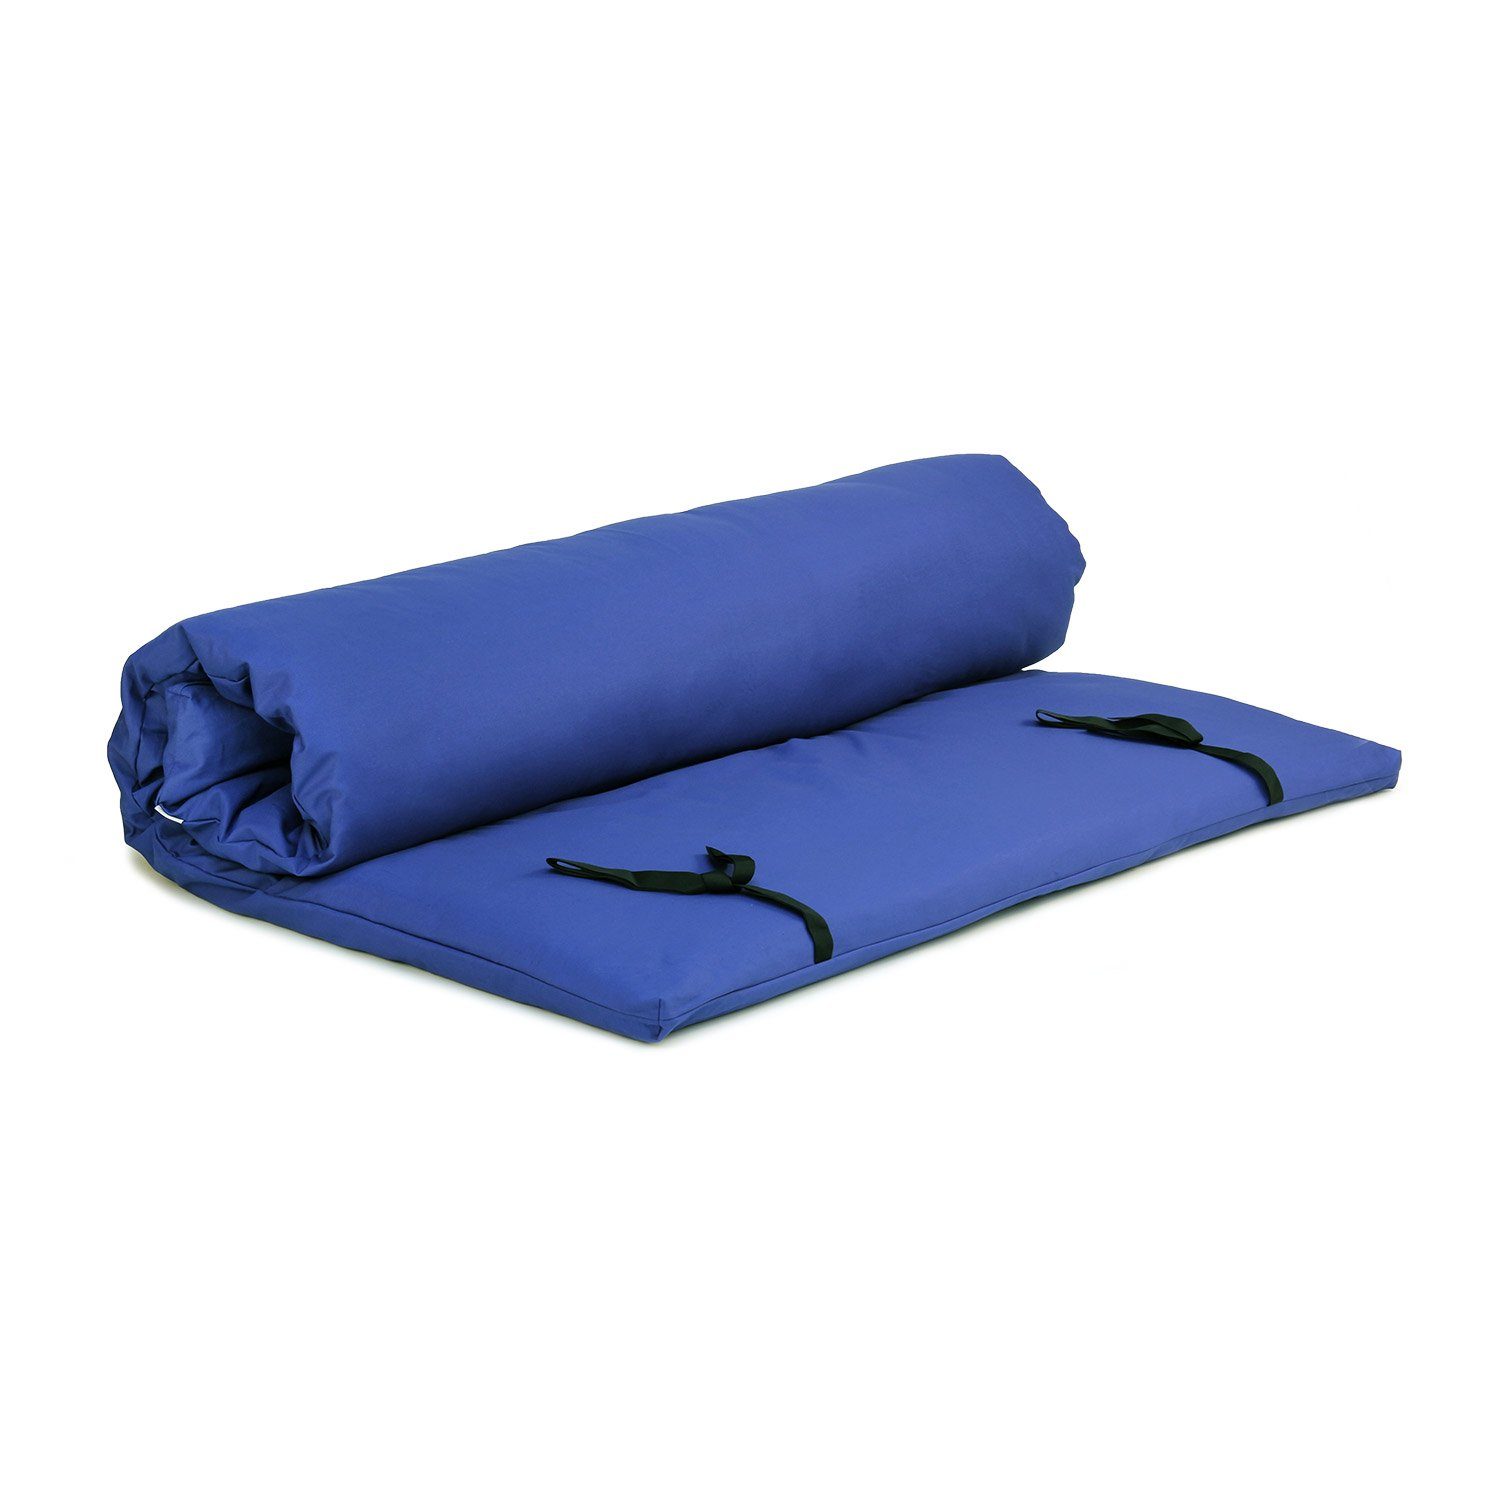 Welltouch Meditationskissen Shiatsumatte mit festem Bezug 100x200 cm, blau, 4 lagig